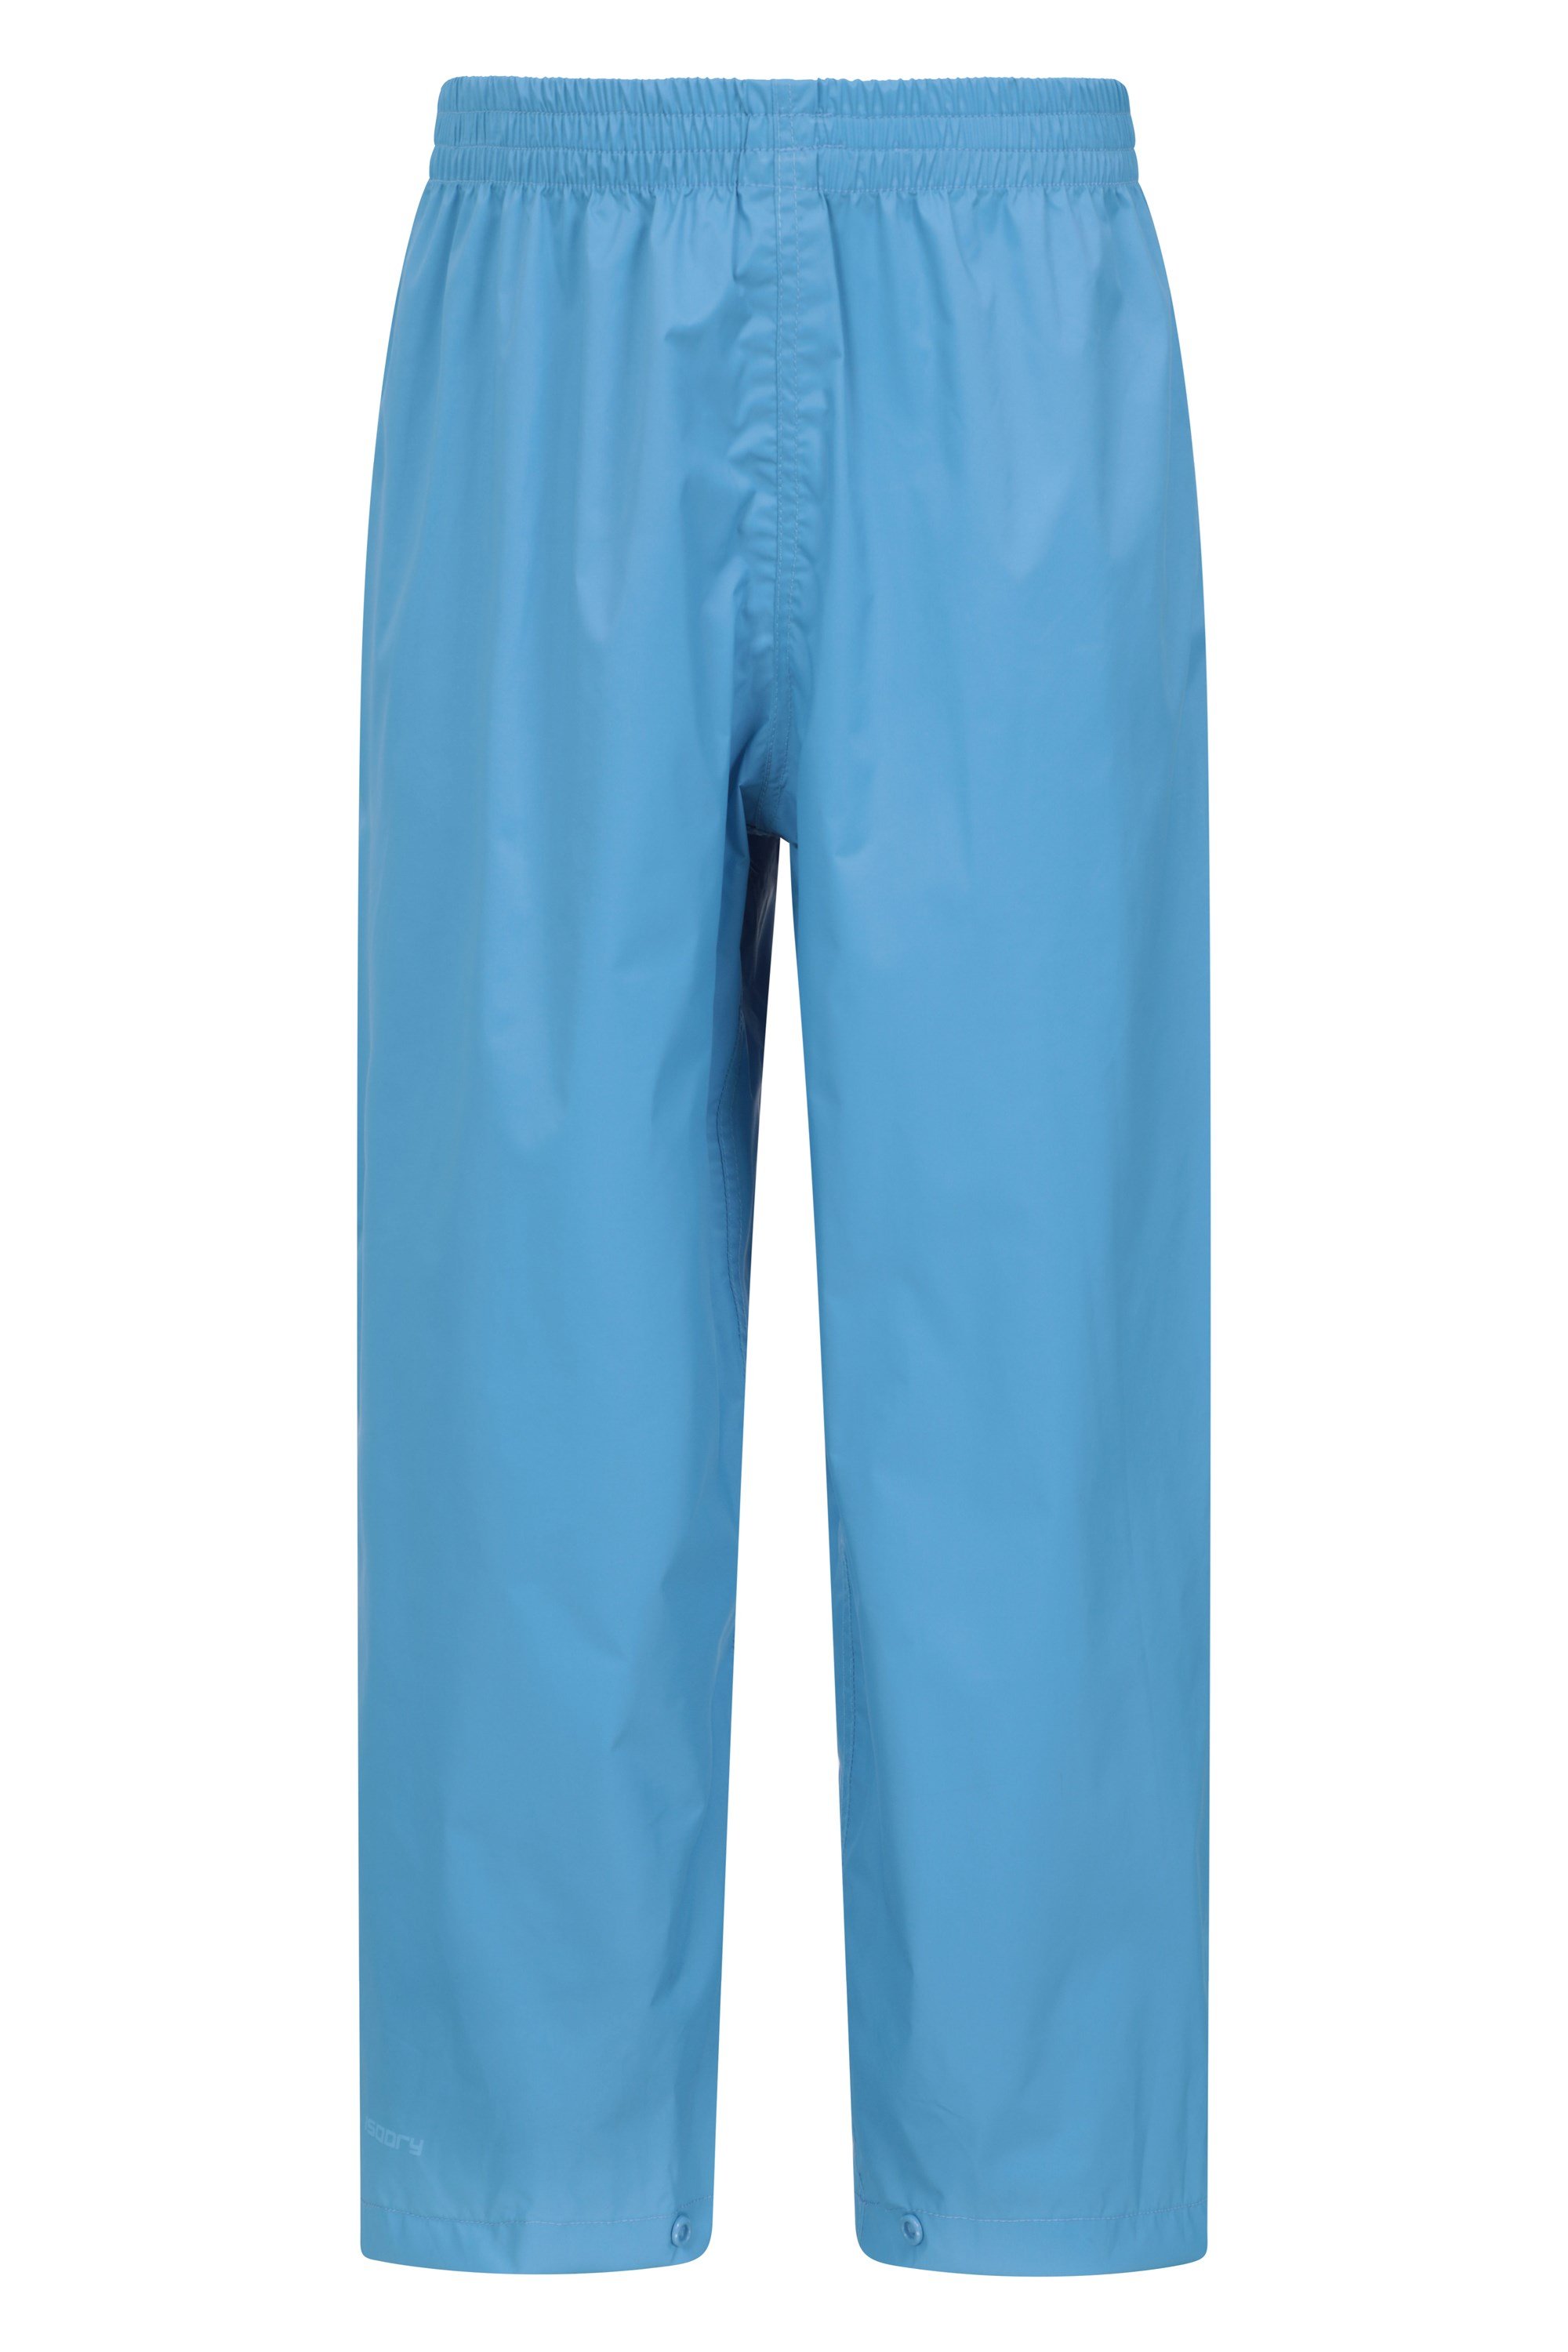 Extreme Mountain Warehouse Blue  Kids 3-4  Long Pants 220 Grams Merino Base £25 